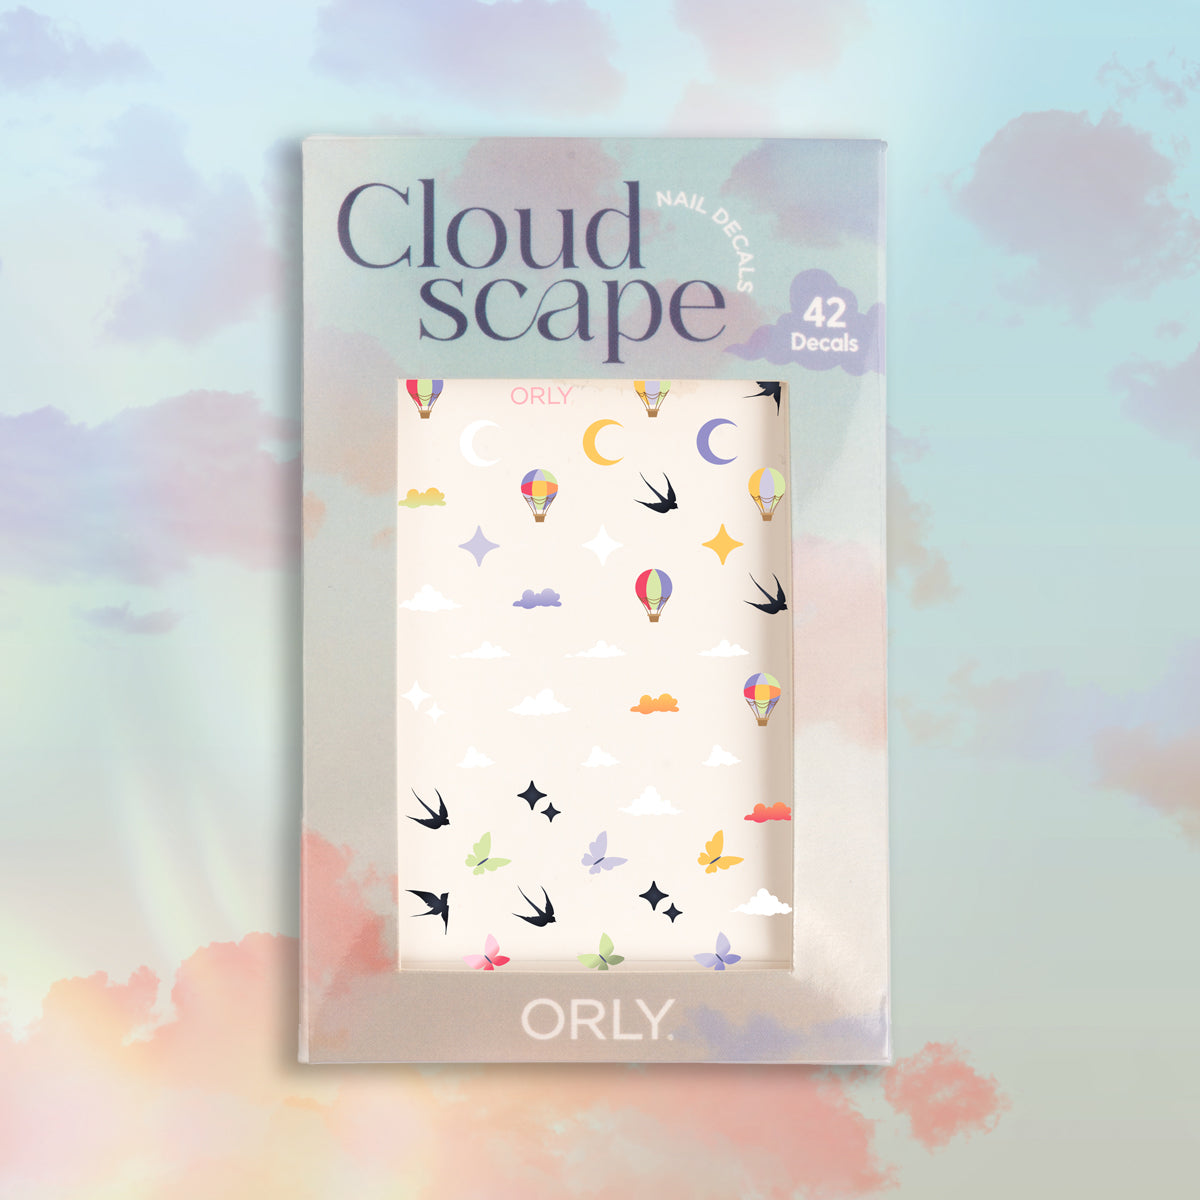 Cloudscape Nail Decals